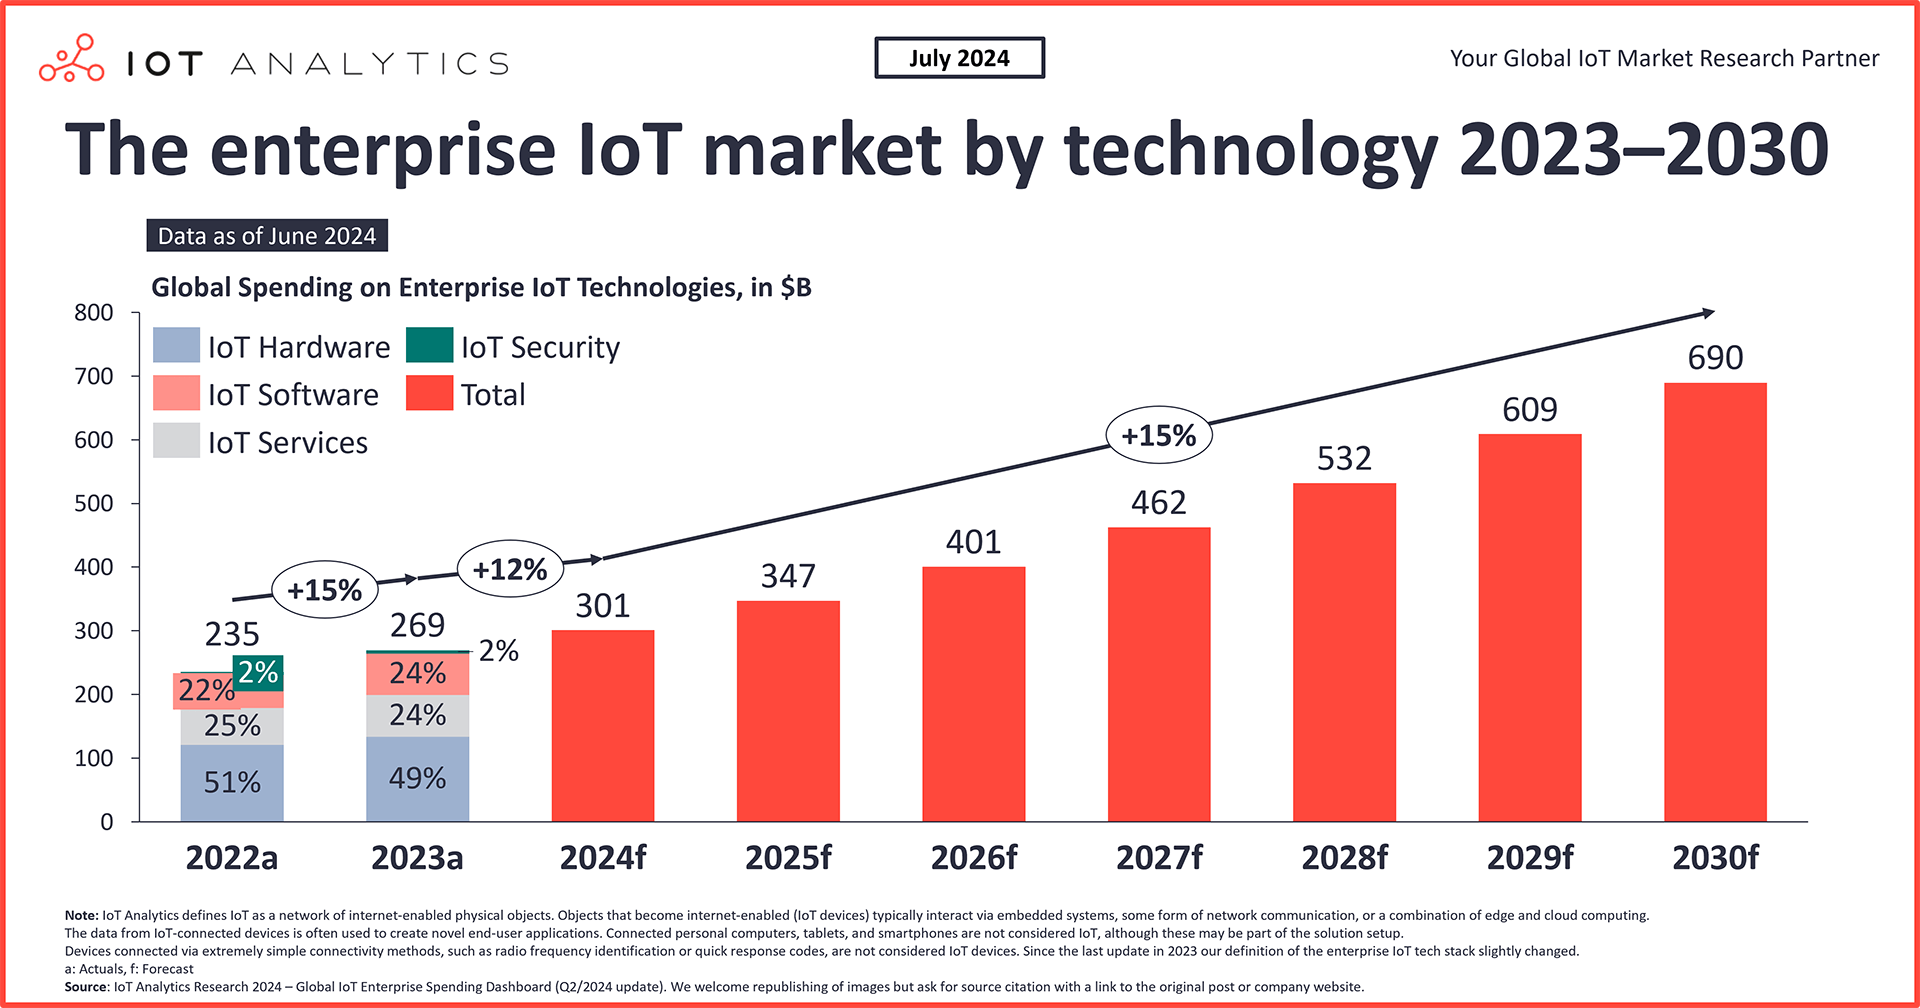 The enterprise IoT market by technology 2023-2030